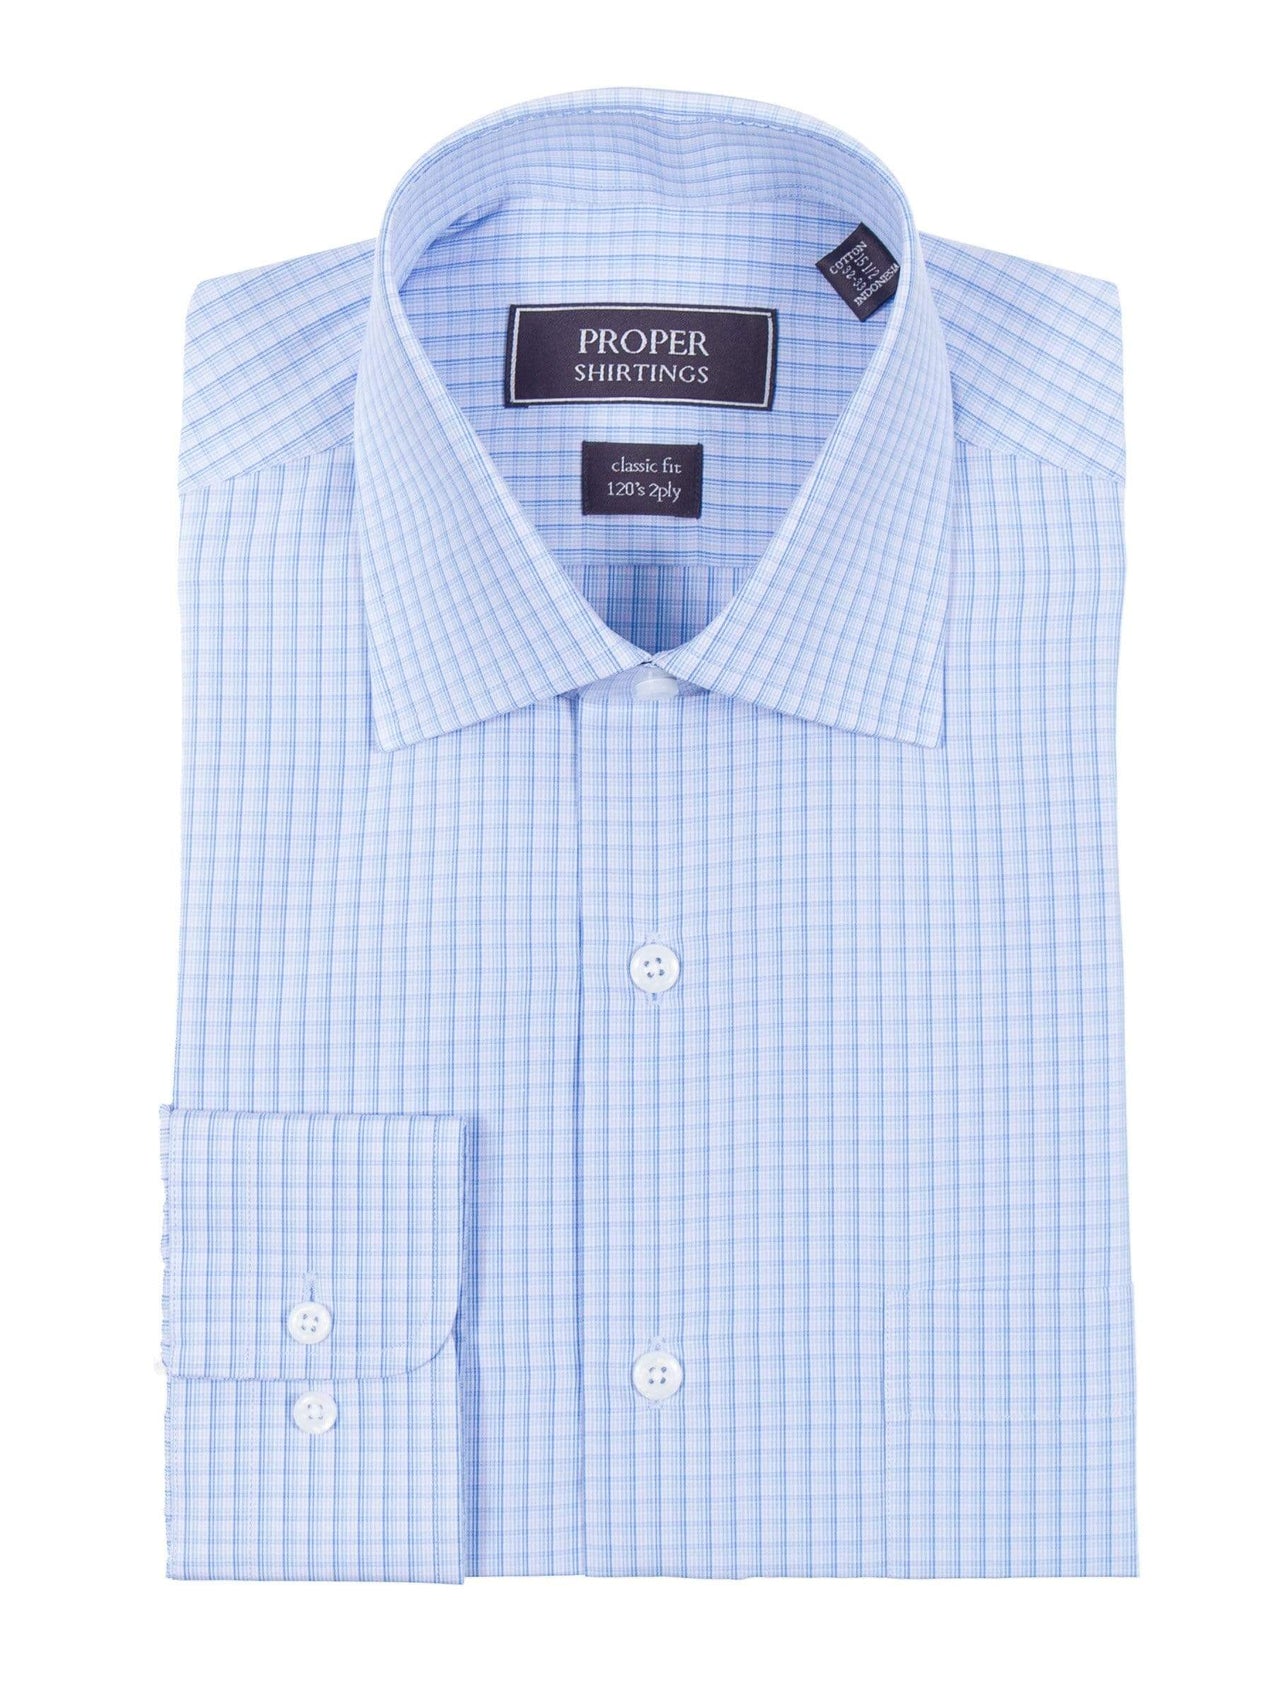 Proper Shirtings SHIRTS Classic Fit Blue & Subtle Pink Check 120's 2Ply Cotton Dress Shirt